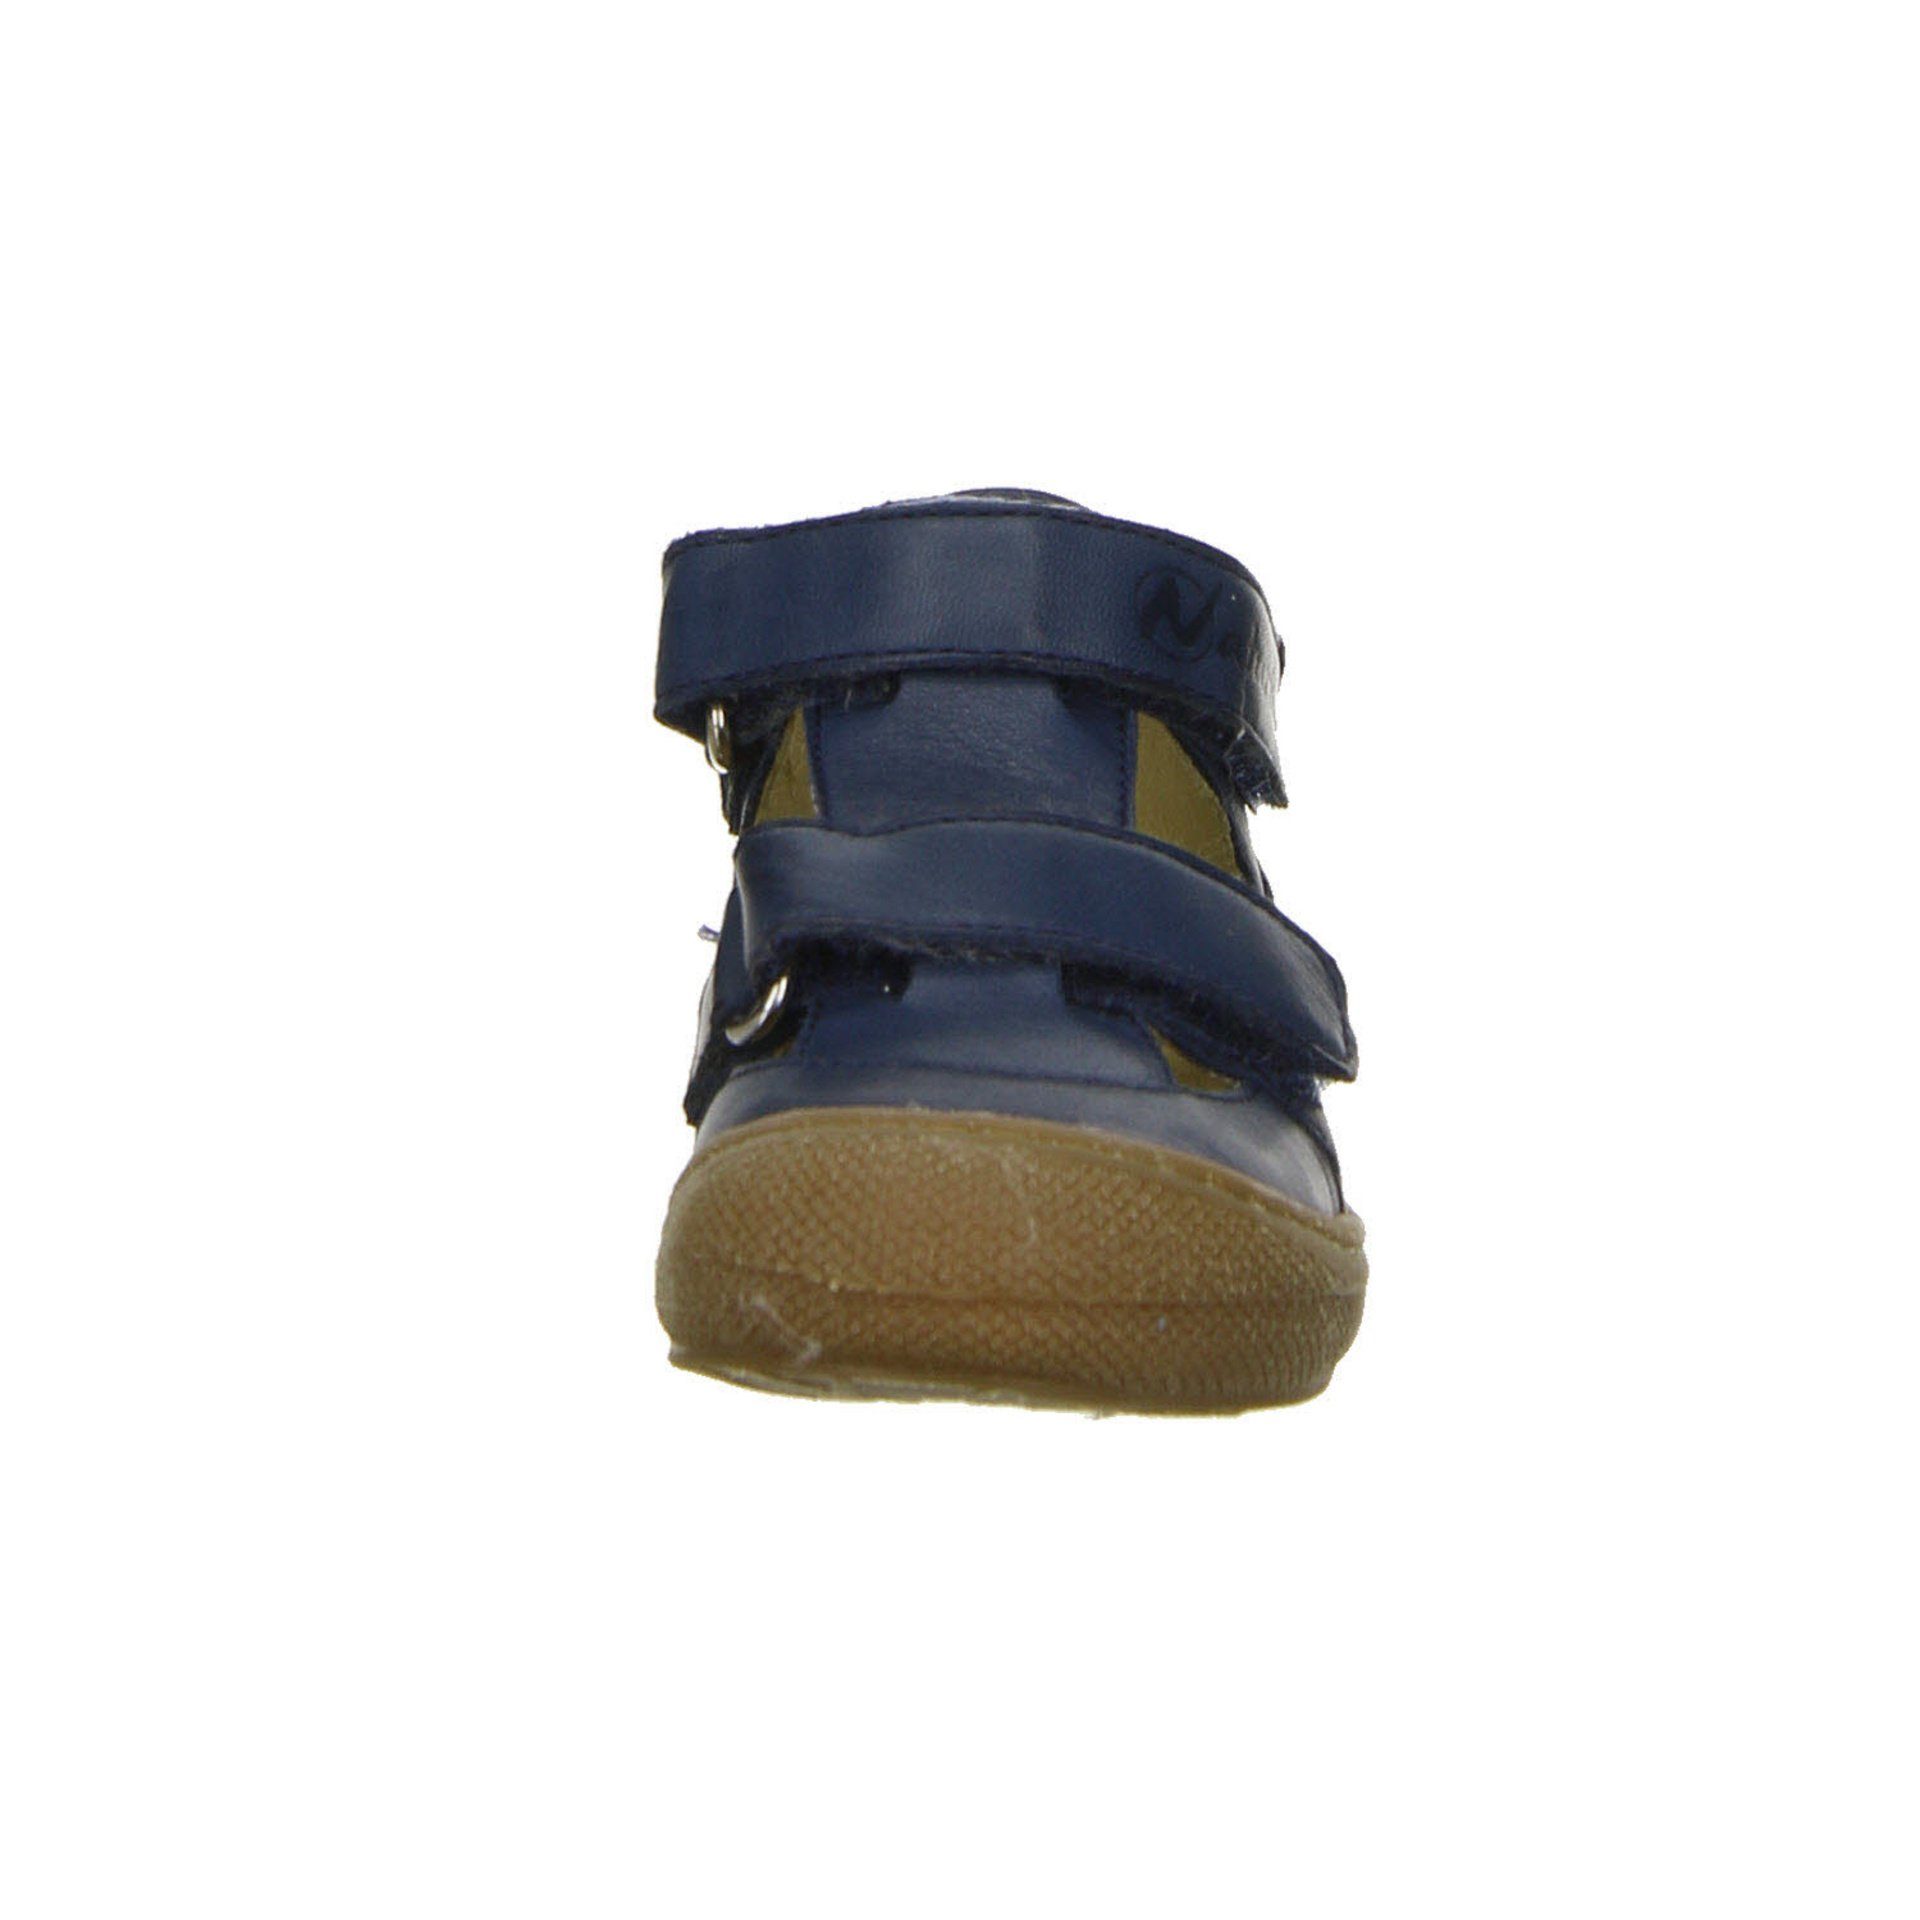 Naturino Jungen Sandalen Schuhe Puffy Minilette Lauflernschuh Glattleder blau dunkel